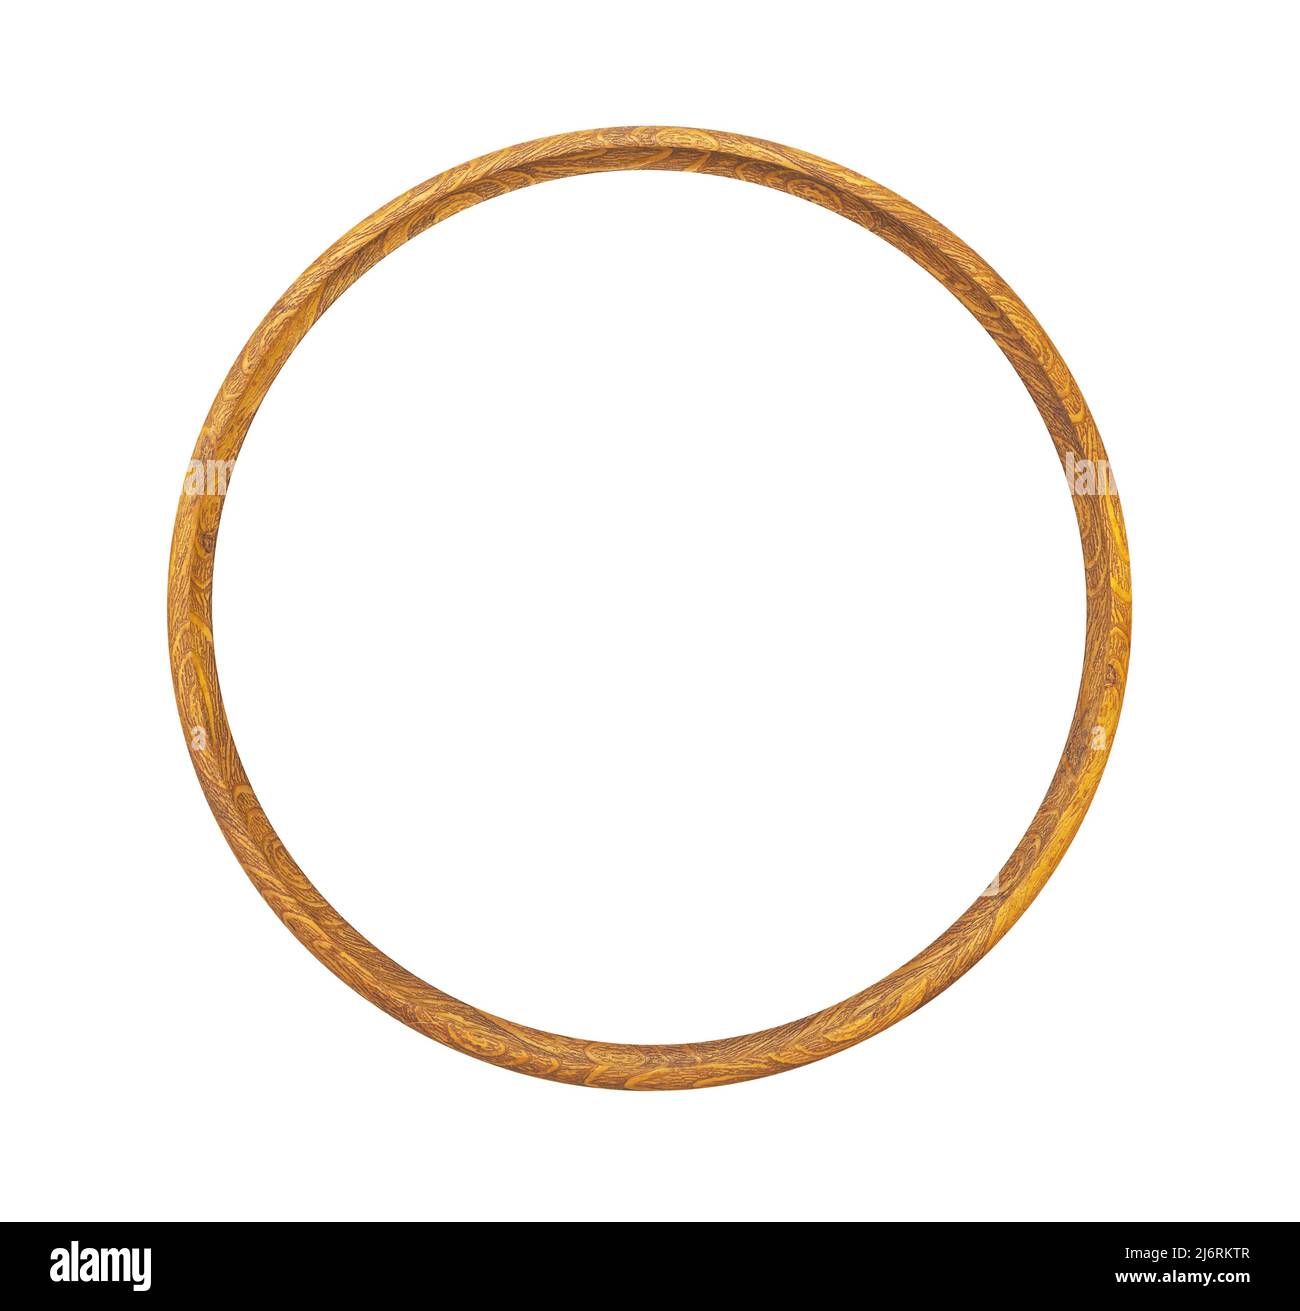 marco redondo de madera, aislado Fotografía de stock - Alamy